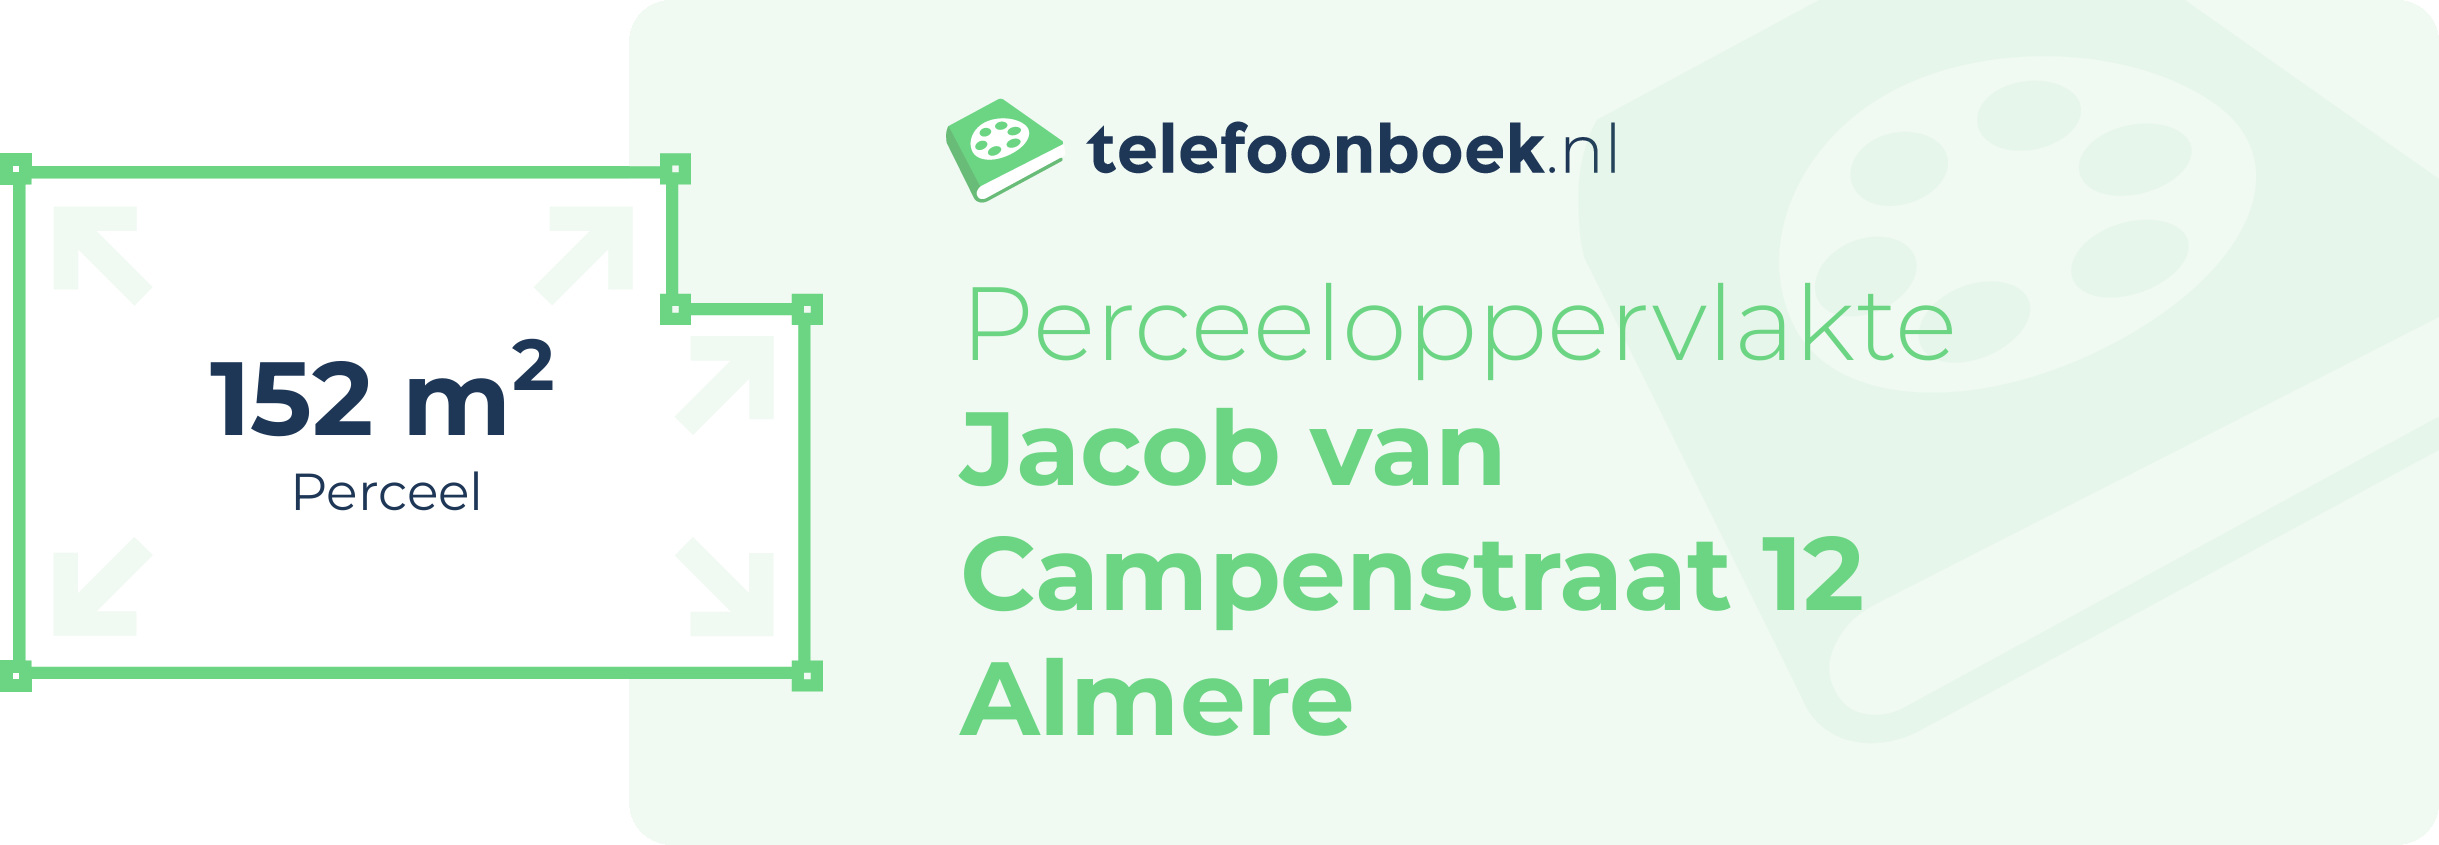 Perceeloppervlakte Jacob Van Campenstraat 12 Almere